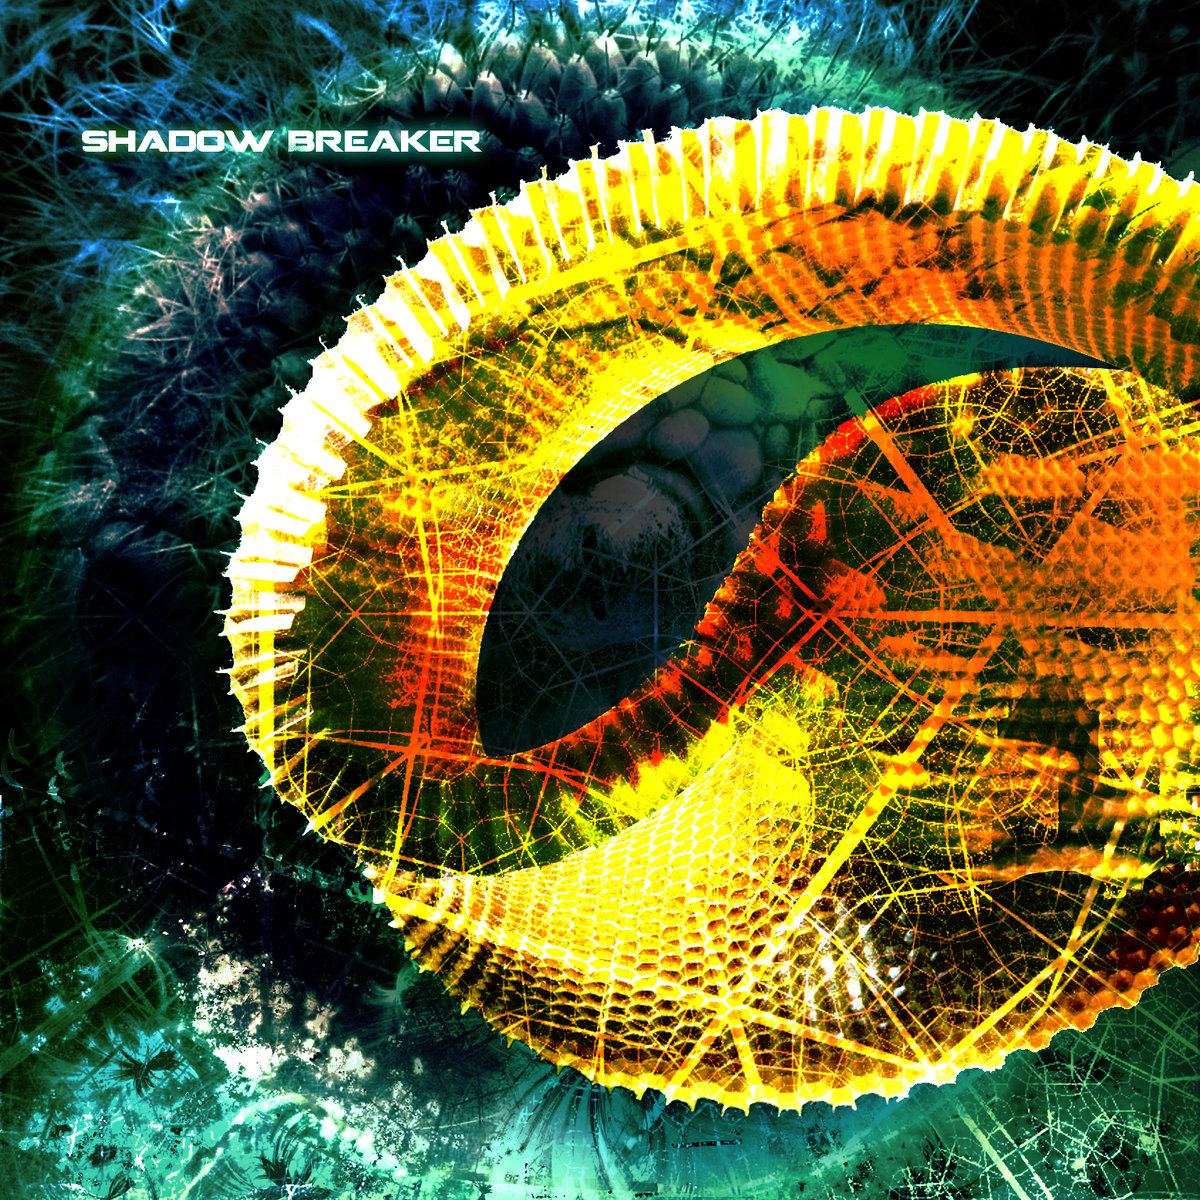 Shadow Breaker feat. Dub Fx - I Will @ 'Shadow Breaker' album (drum & bass, electronic)